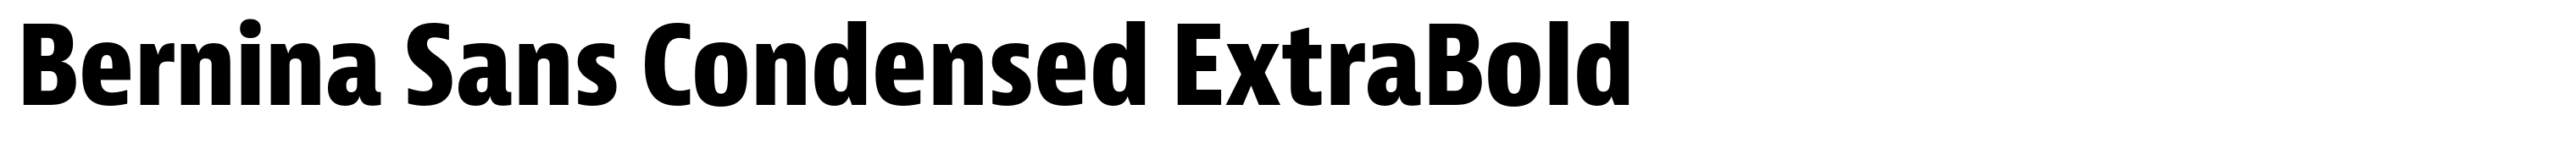 Bernina Sans Condensed ExtraBold